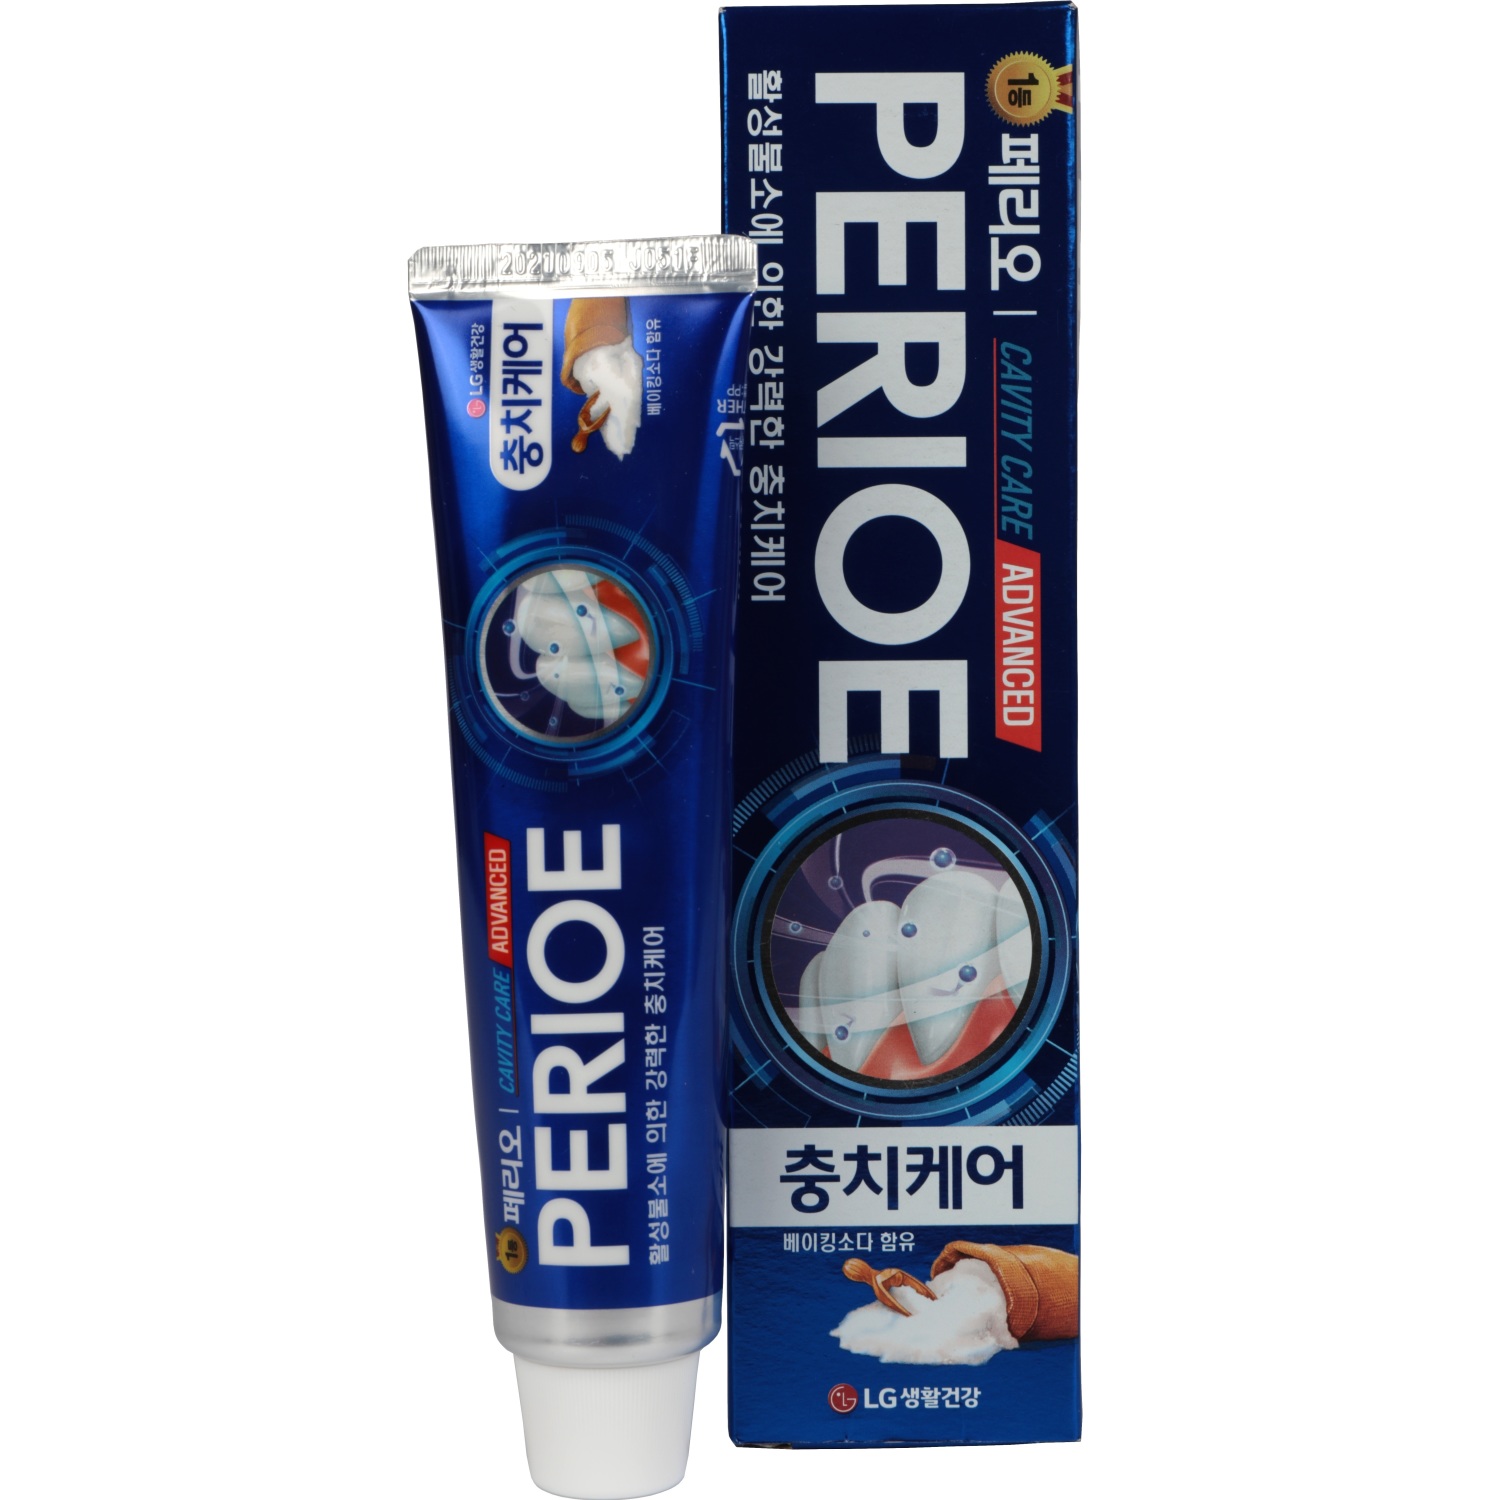 Зубная паста Perioe Cavity Care Advanced для эффективной борьбы с кариесом 130 г зубная паста perioe tar tar care fresh mint свежая мята 120 г